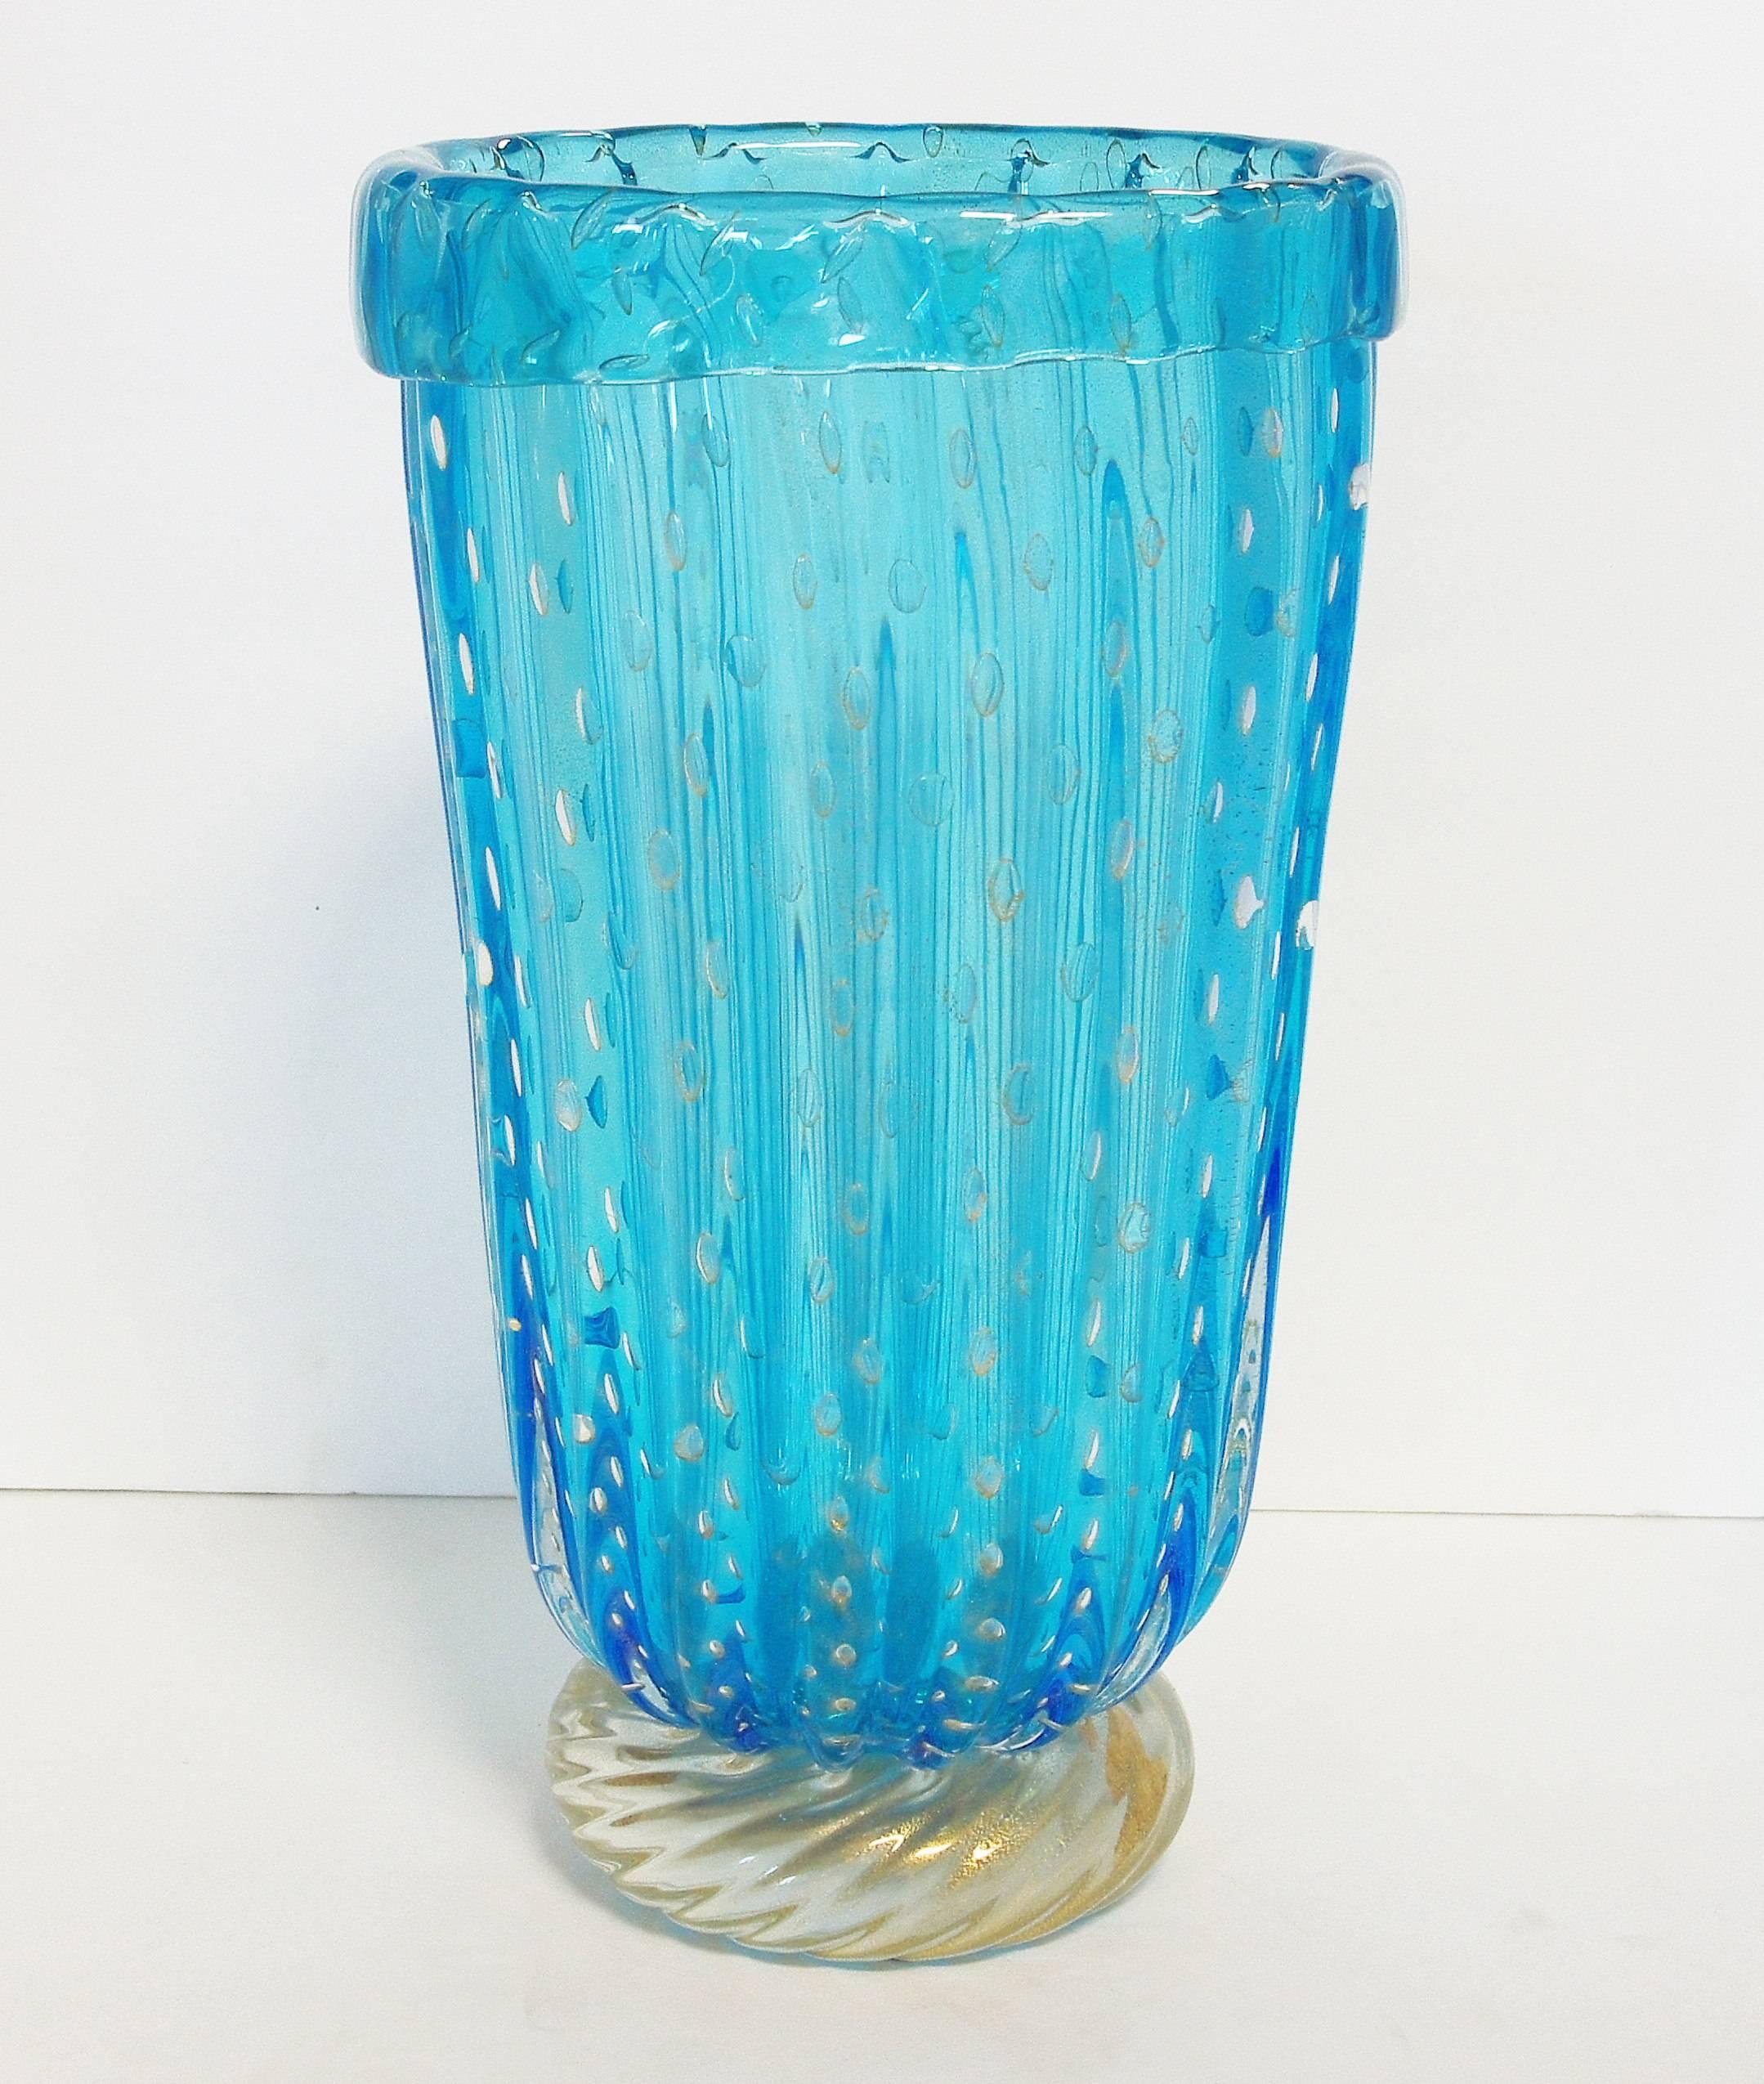 Italian Murano glass Aquamarine Pulegoso vase by Pino Signoretto.
Signed on the base.